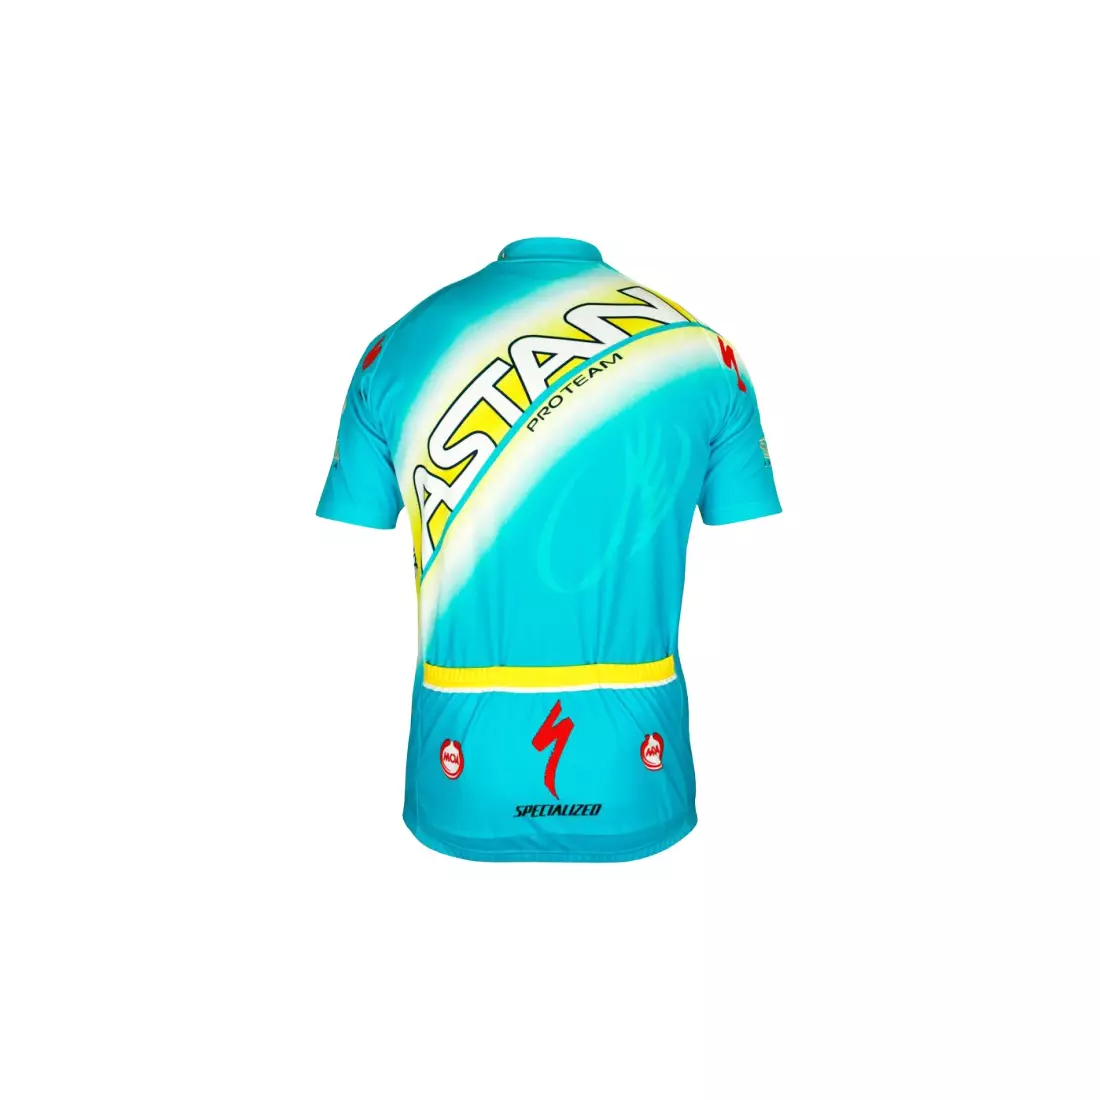 NALINI - TEAM ASTANA 2013 - cyklistický dres